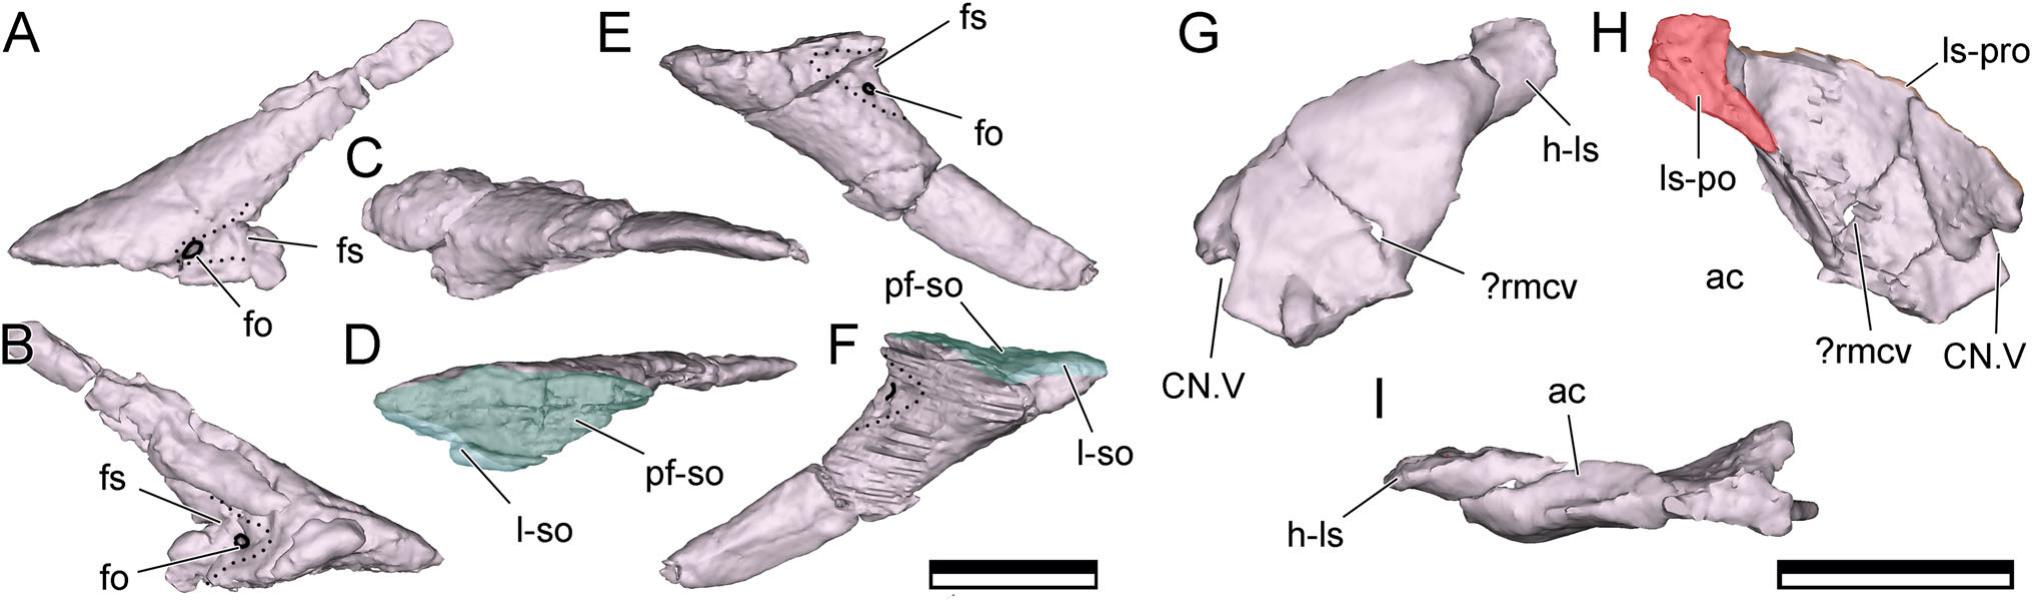 Craniomandibular Osteology of Manidens condorensis (Ornithischia